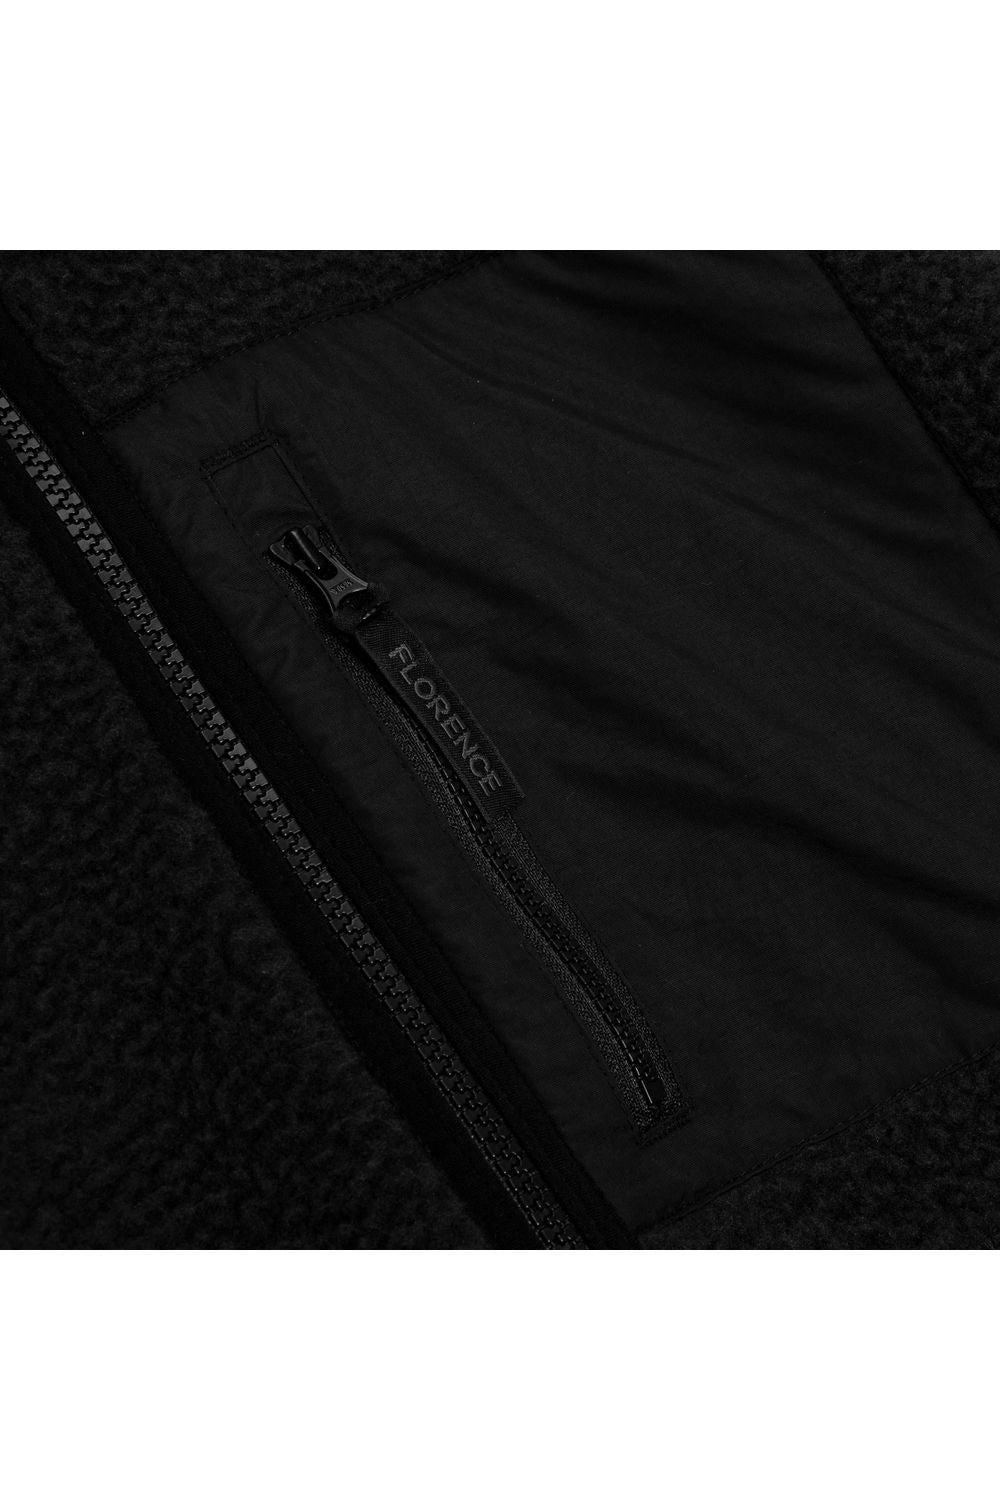 Florence Marine X High Pile Utility Fleece Jacket Black